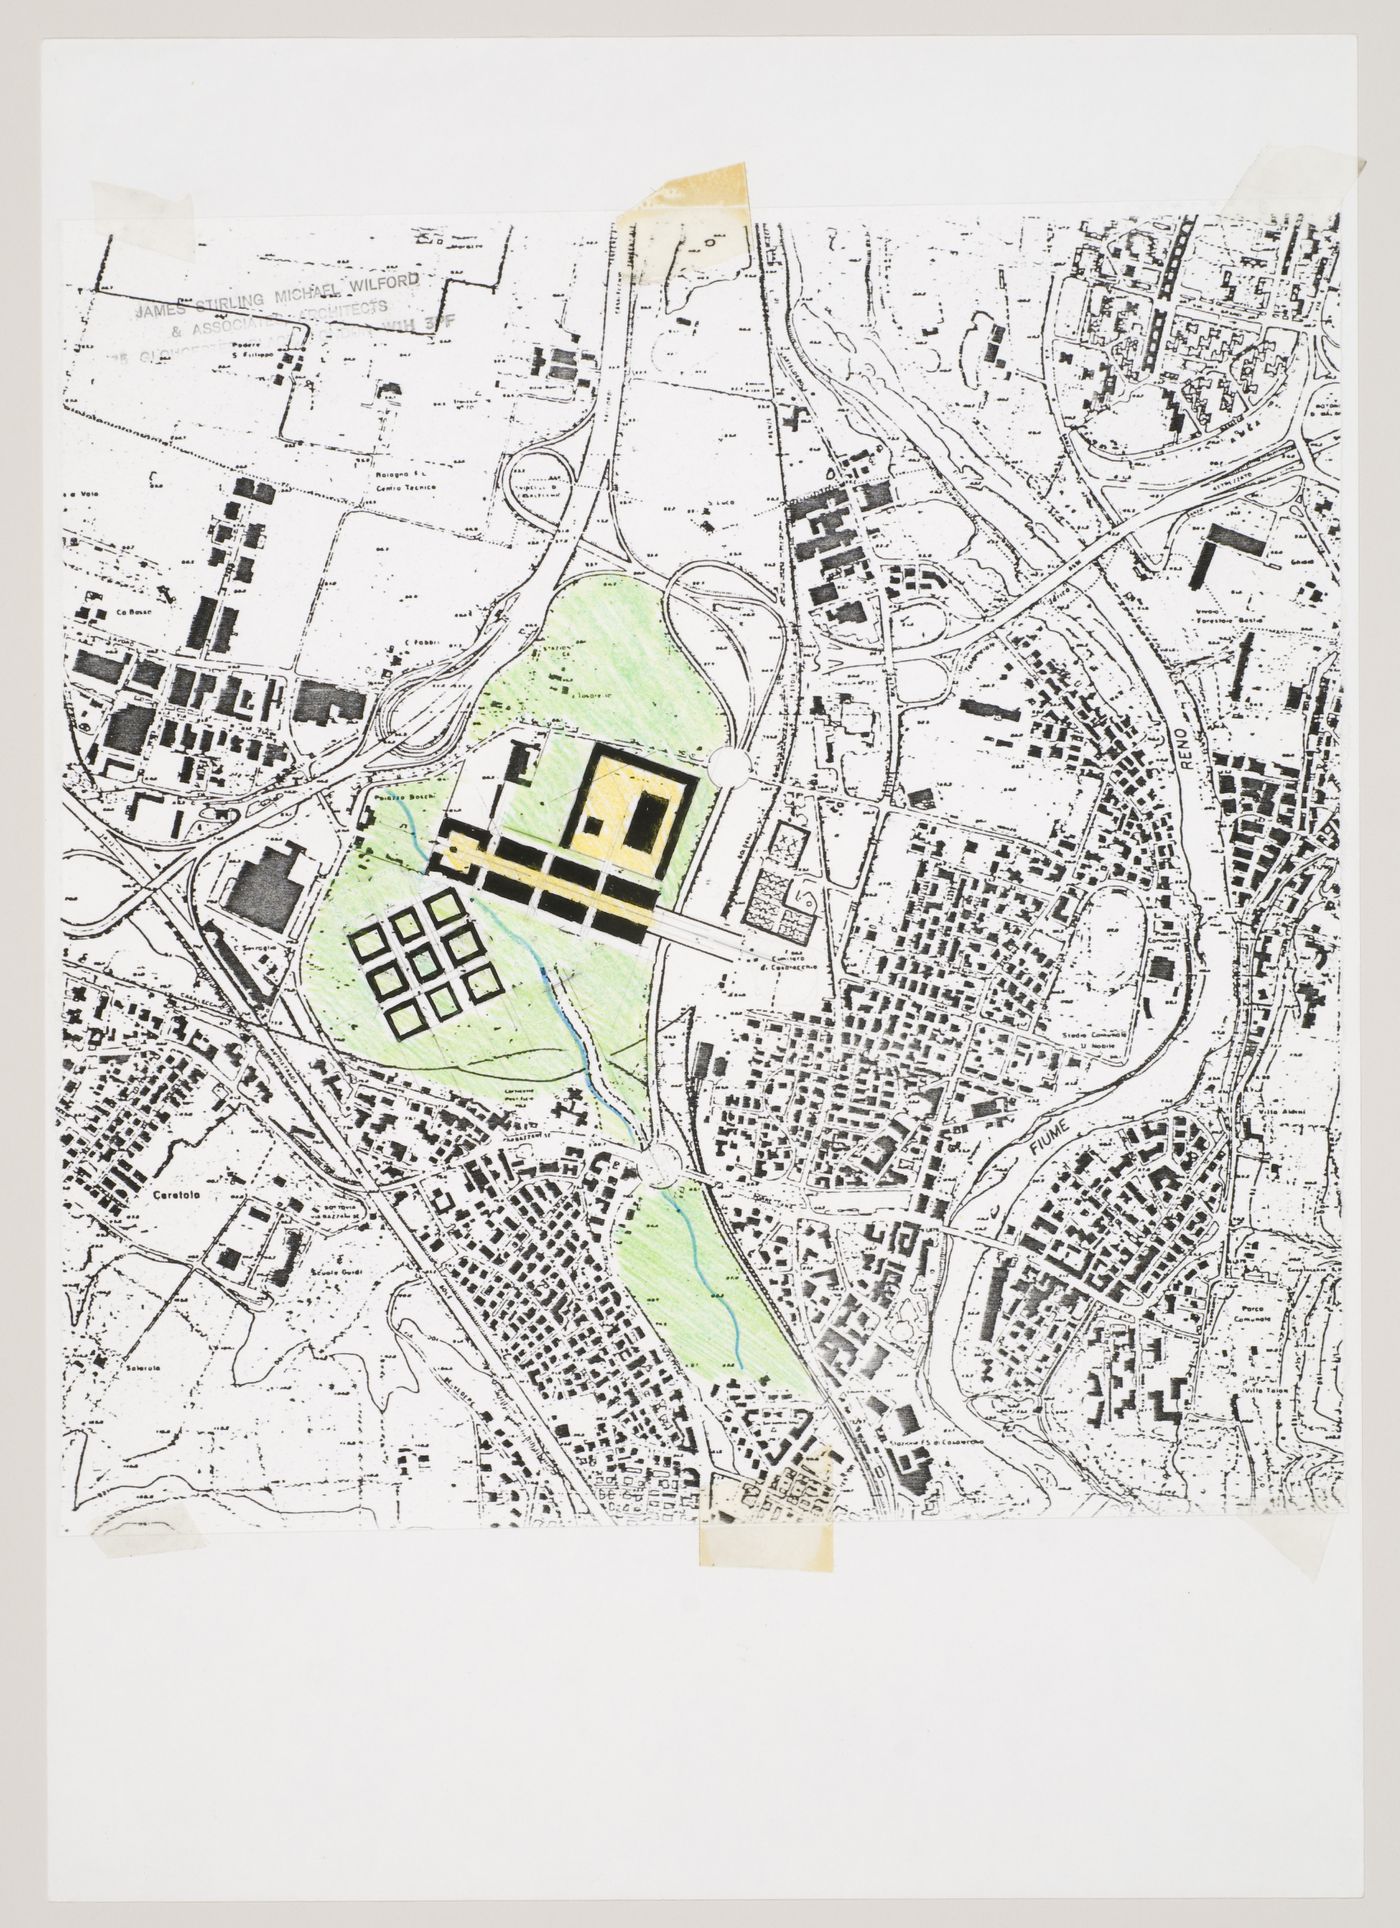 New Town Centre, Caselecchio di Reno, Italy: site plan